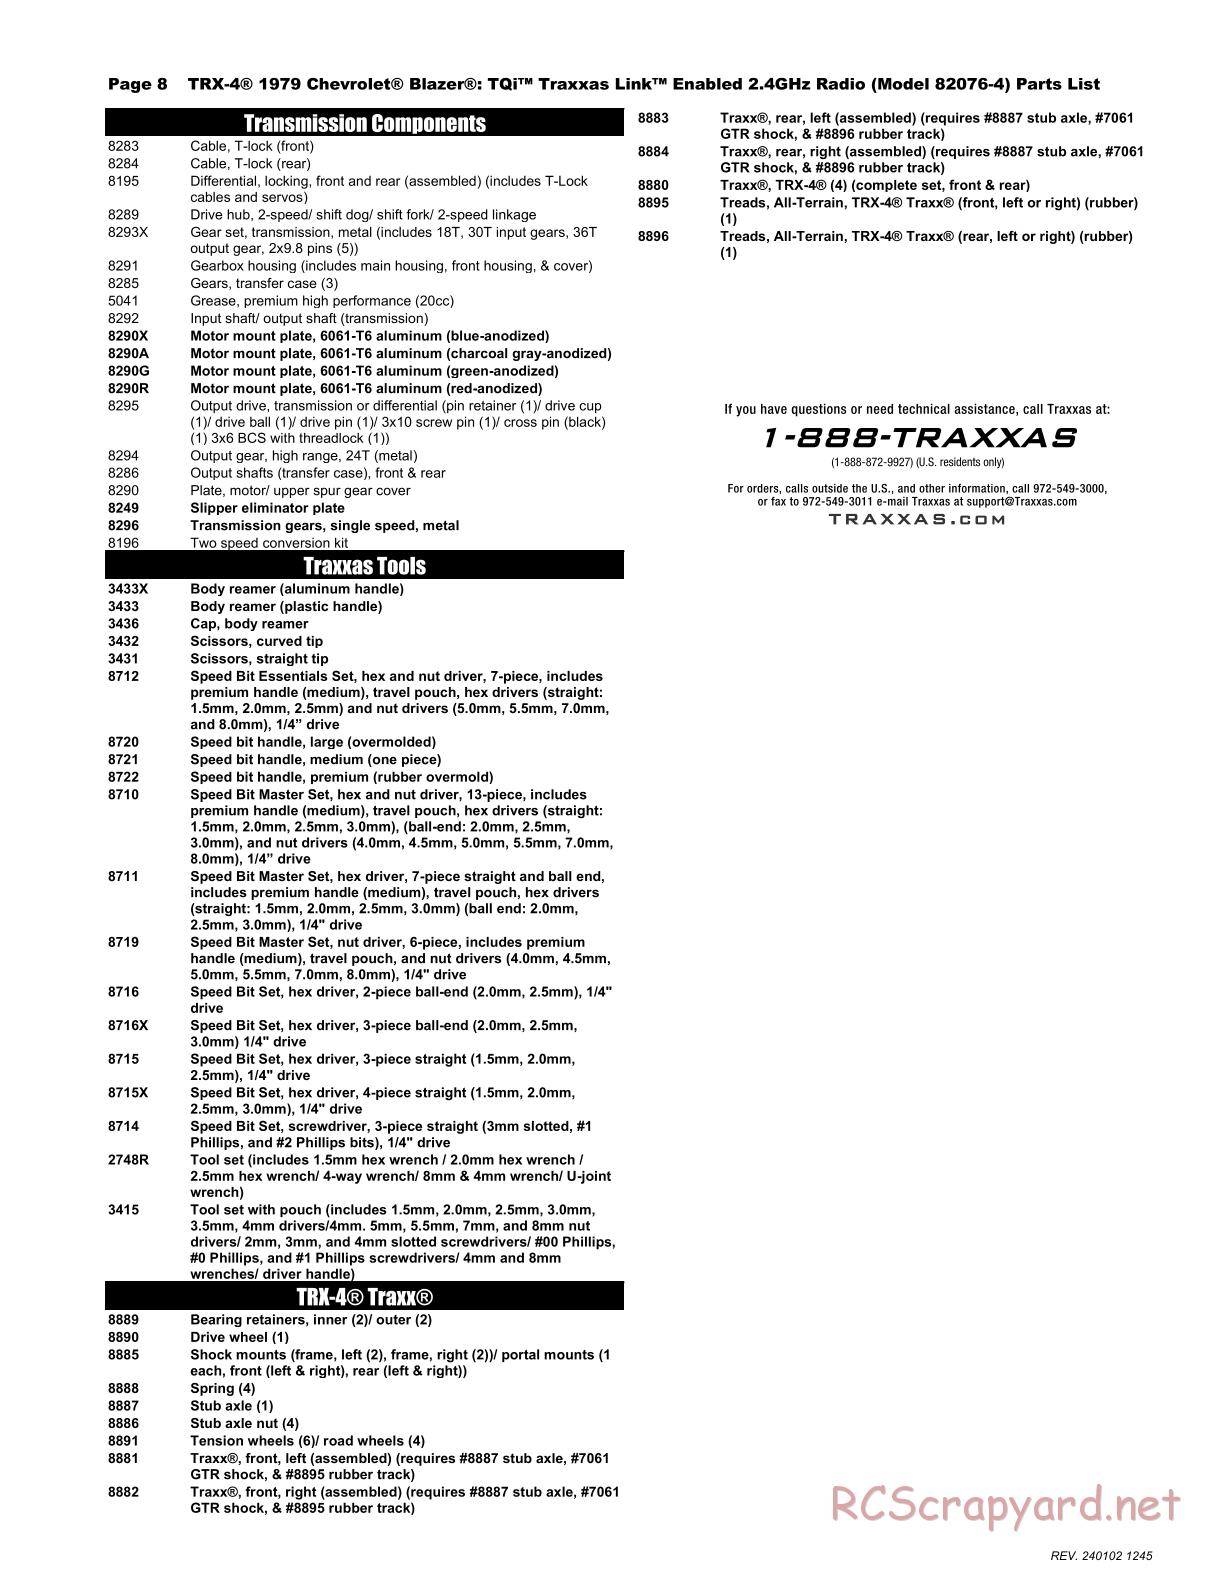 Traxxas - TRX-4 Chevrolet K5 Blazer (2019) - Parts List - Page 8